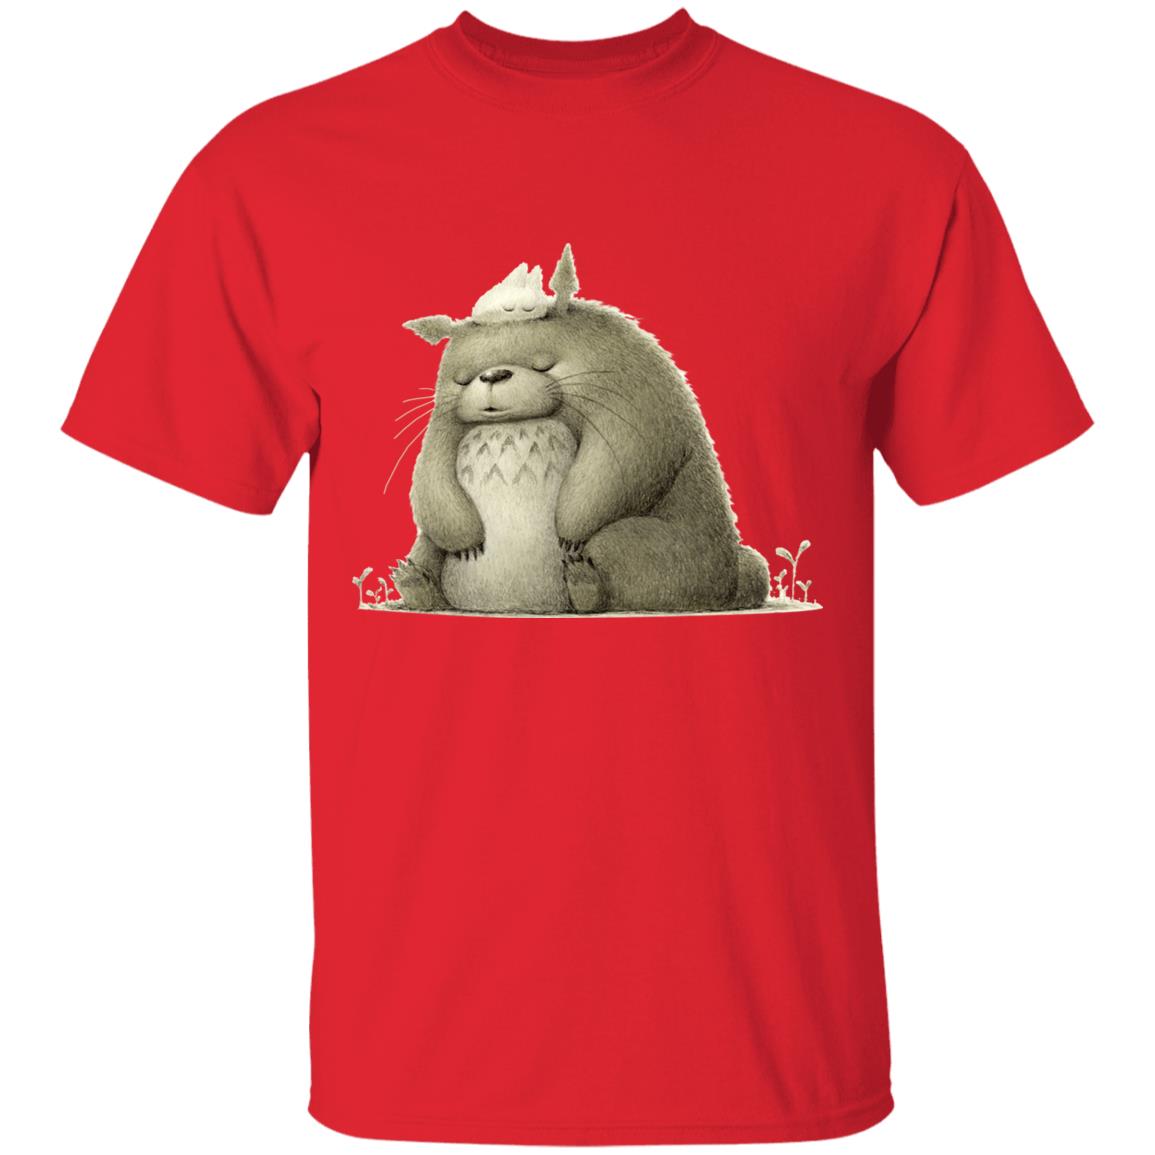 The Fluffy Totoro T Shirt